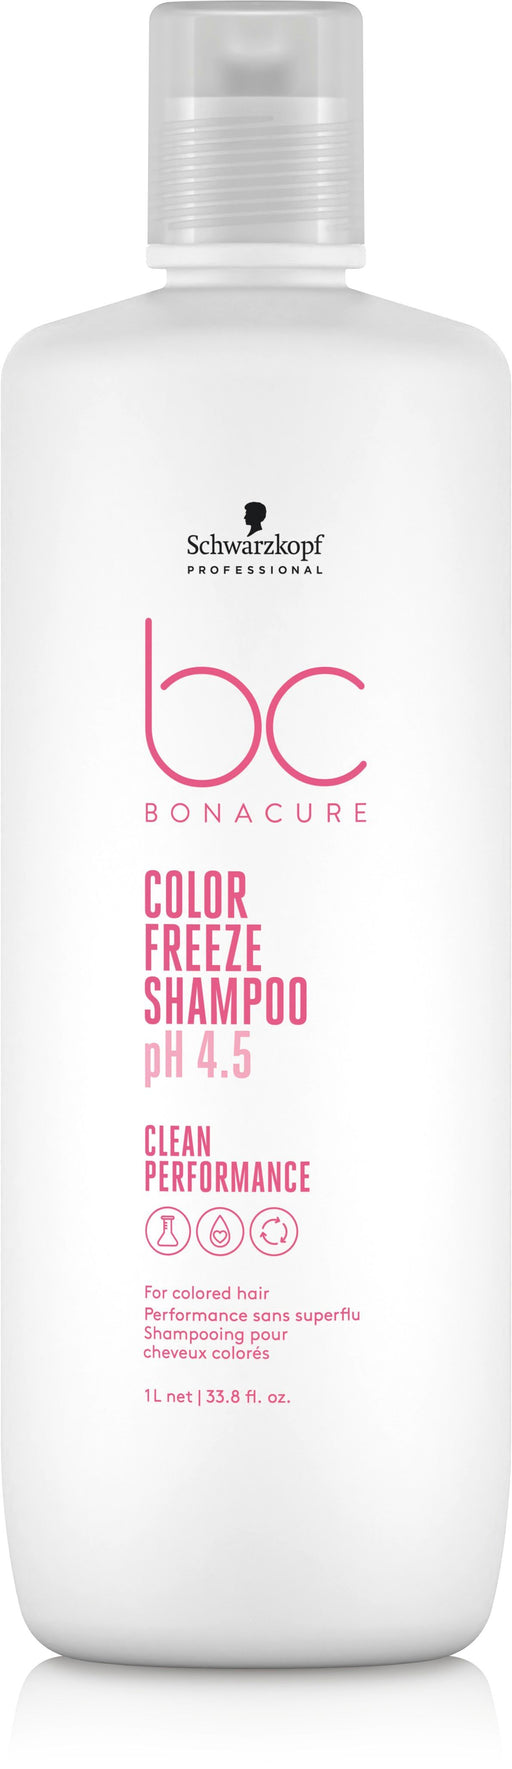 Schwarzkopf BC Clean Performance Color Freeze Shampoo